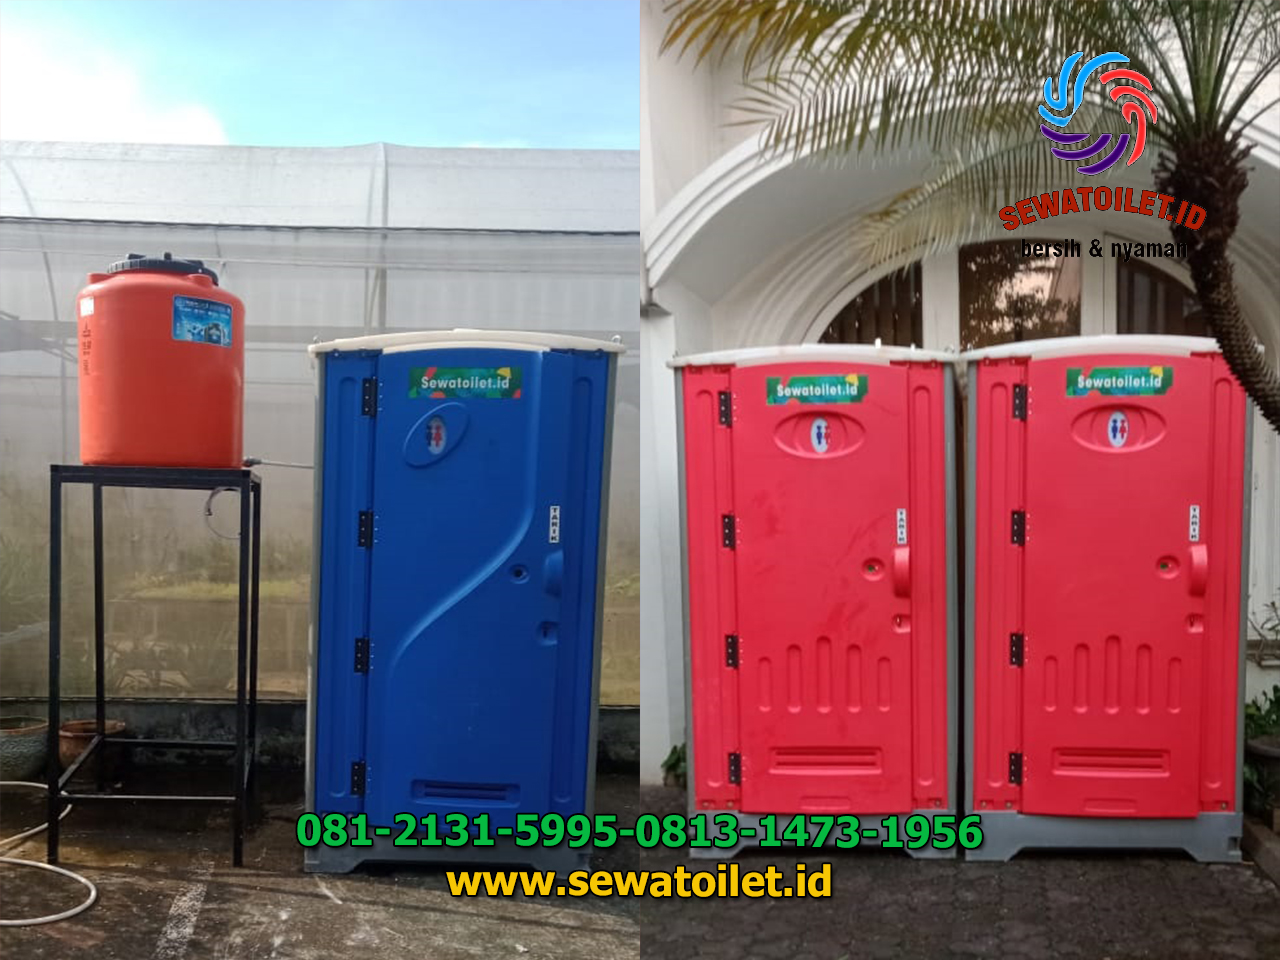 Jasa Sewa Toilet Portable Bersih Harum di Tangerang